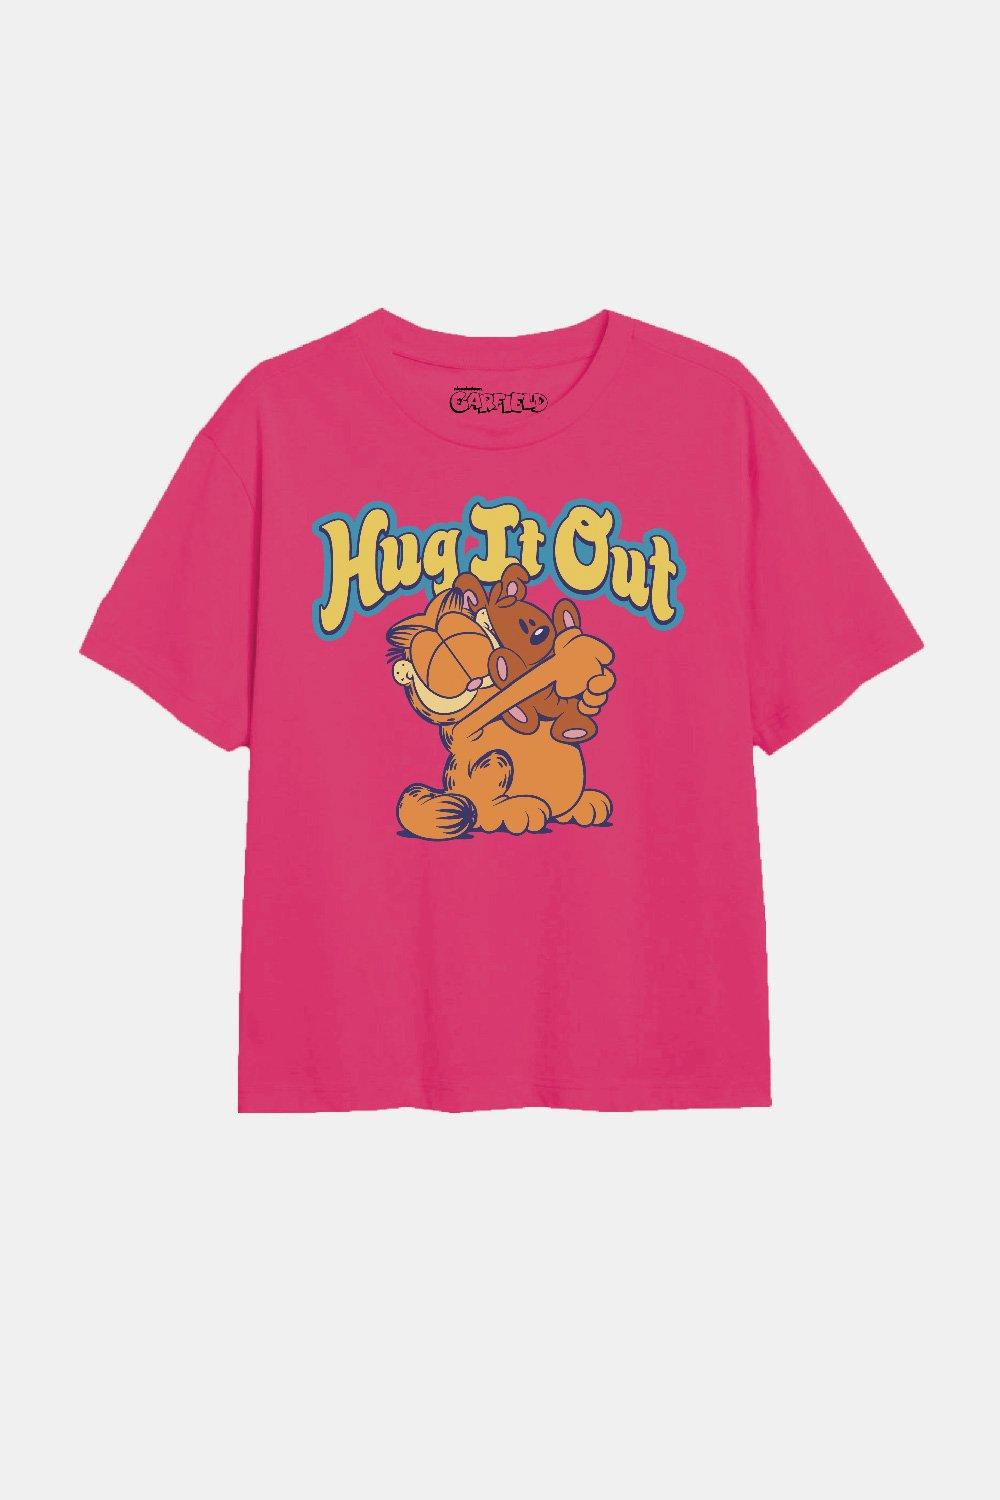 Hug It Out Girls T-Shirt